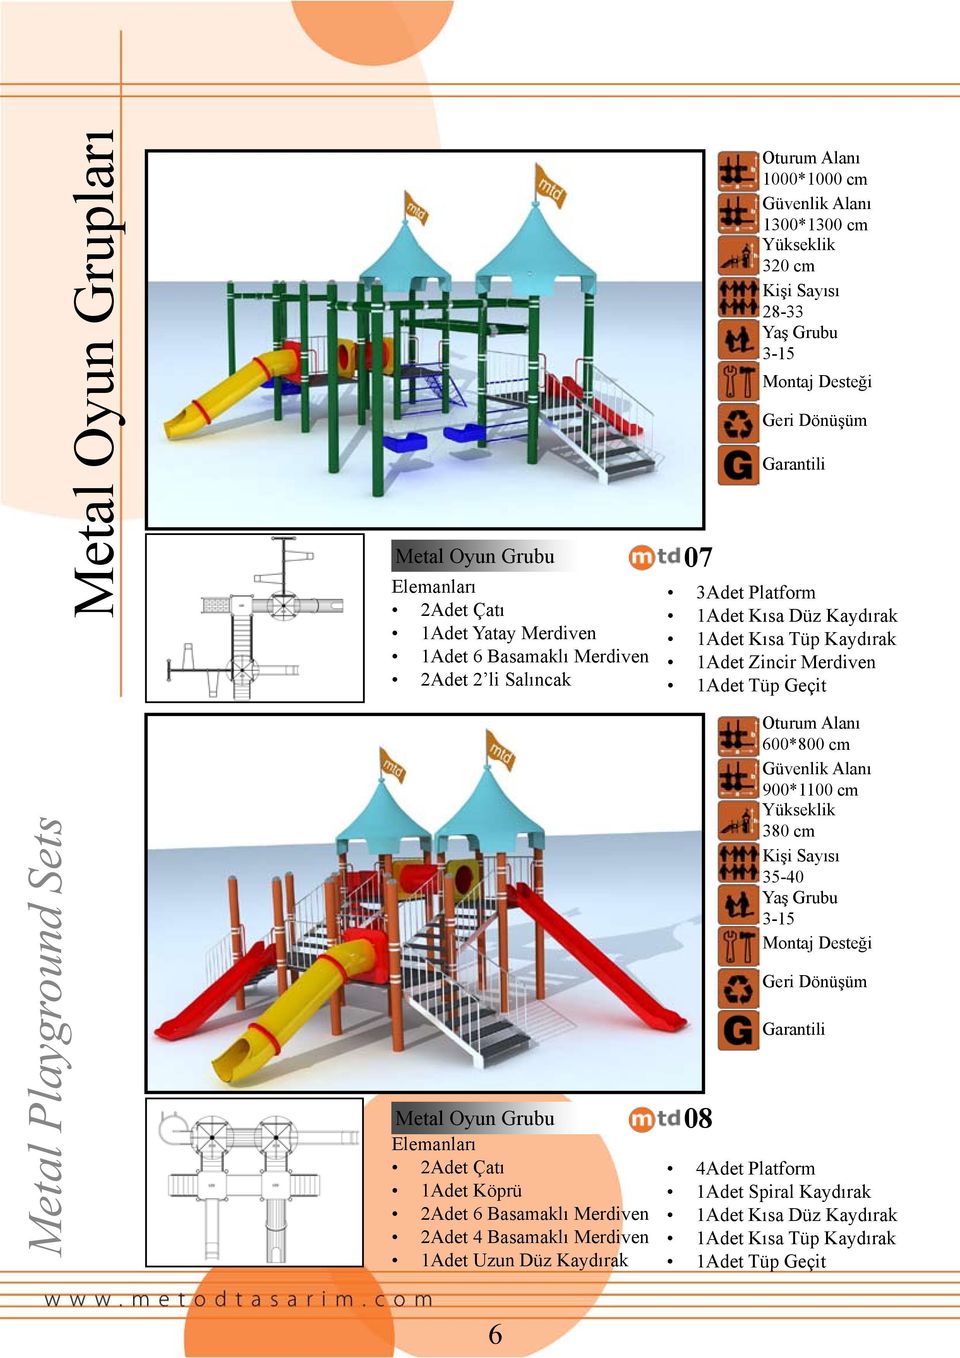 Playground Sets Metal Oyun Grubu 2Adet Çatı 1Adet Köprü 2Adet 6 Basamaklı Merdiven 2Adet 4 Basamaklı Merdiven 1Adet Uzun Düz Kaydırak 08